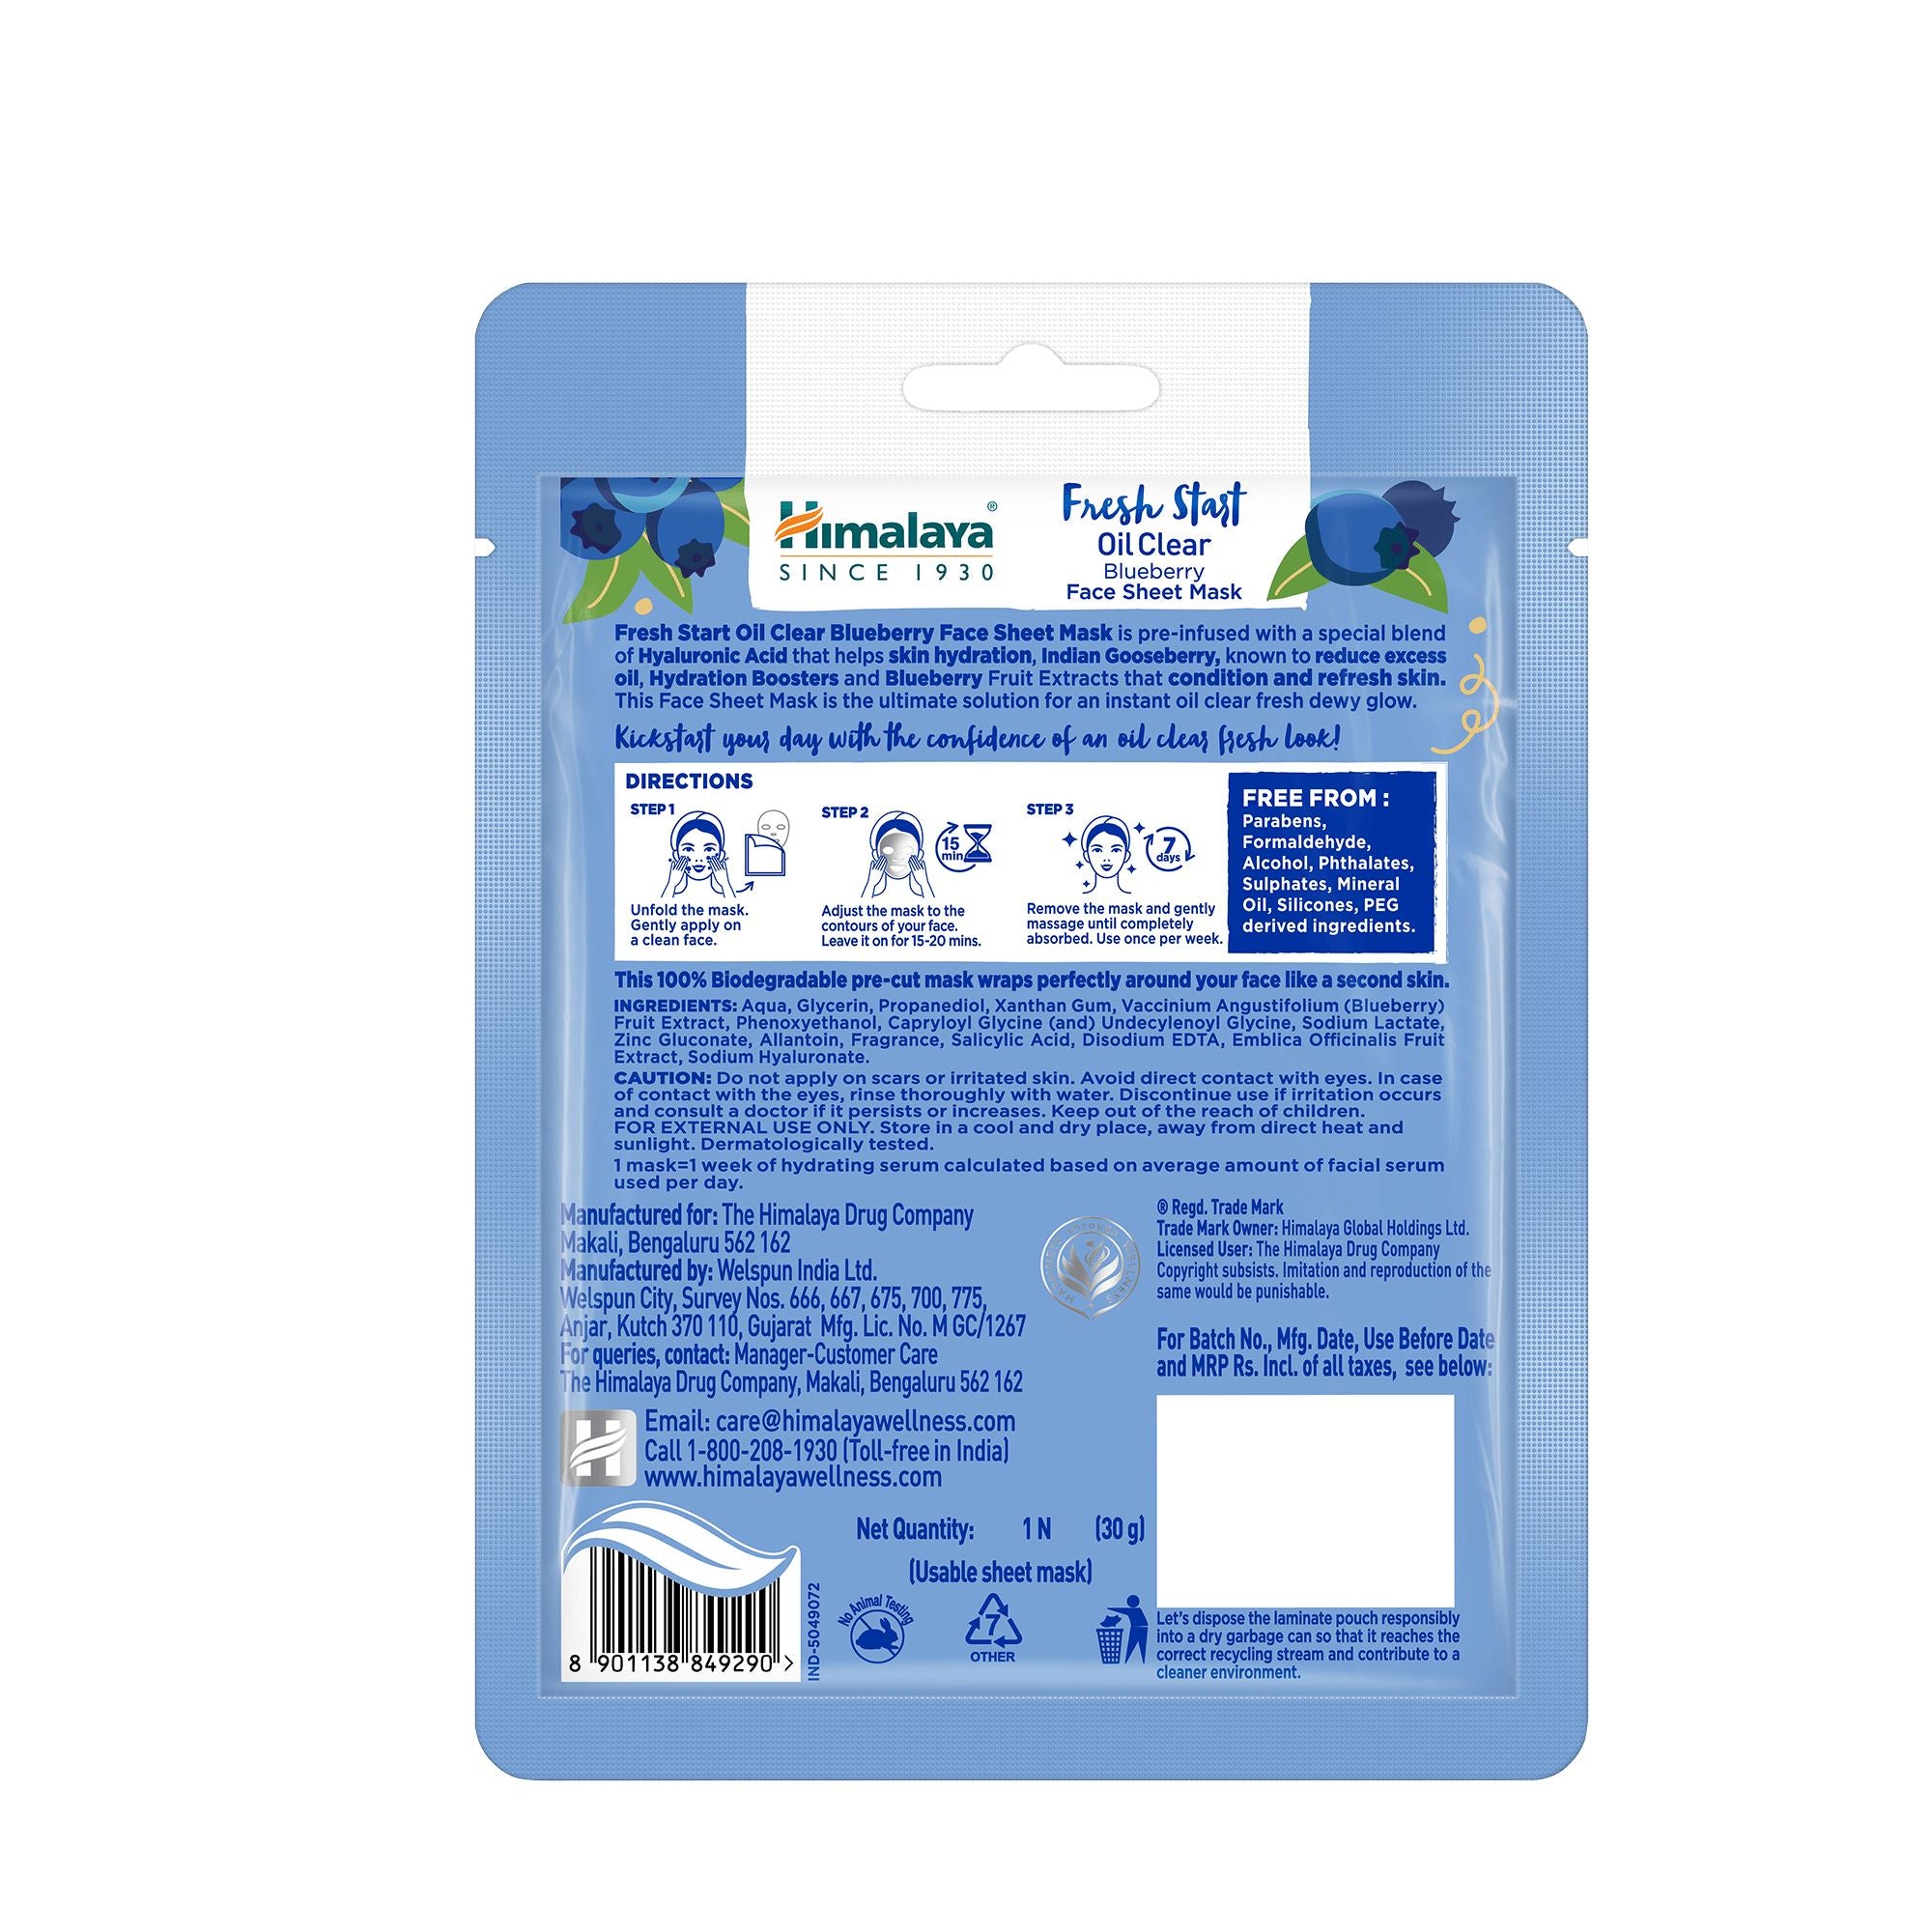 Himalaya Fresh Start Oil Clear Blueberry Face Sheet Mask Ingredients